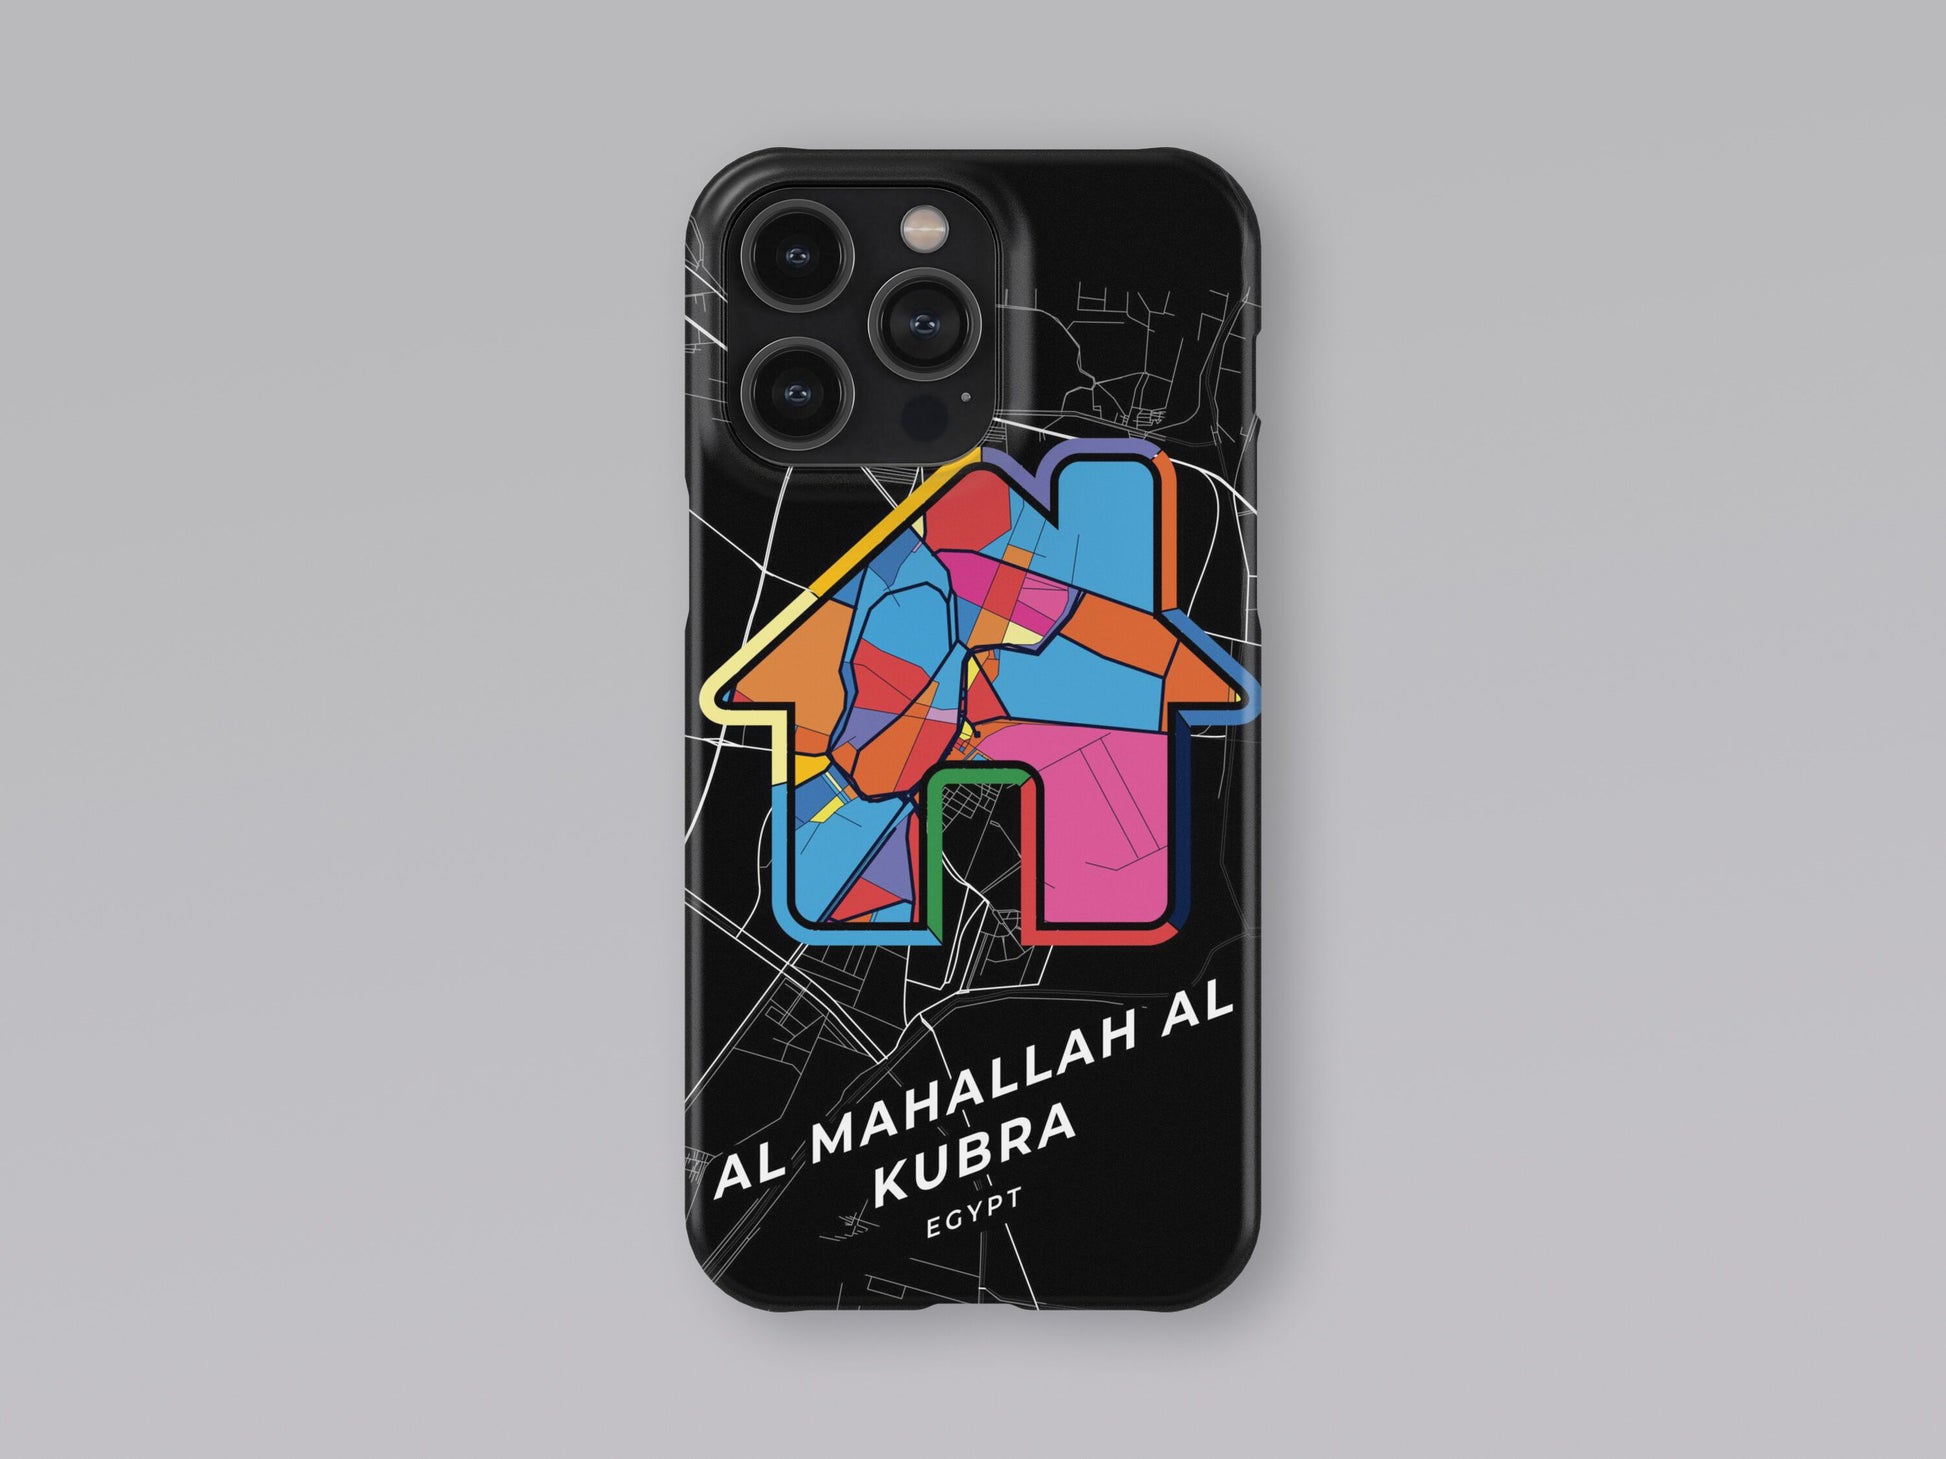 Al Mahallah Al Kubra Egypt slim phone case with colorful icon. Birthday, wedding or housewarming gift. Couple match cases. 3